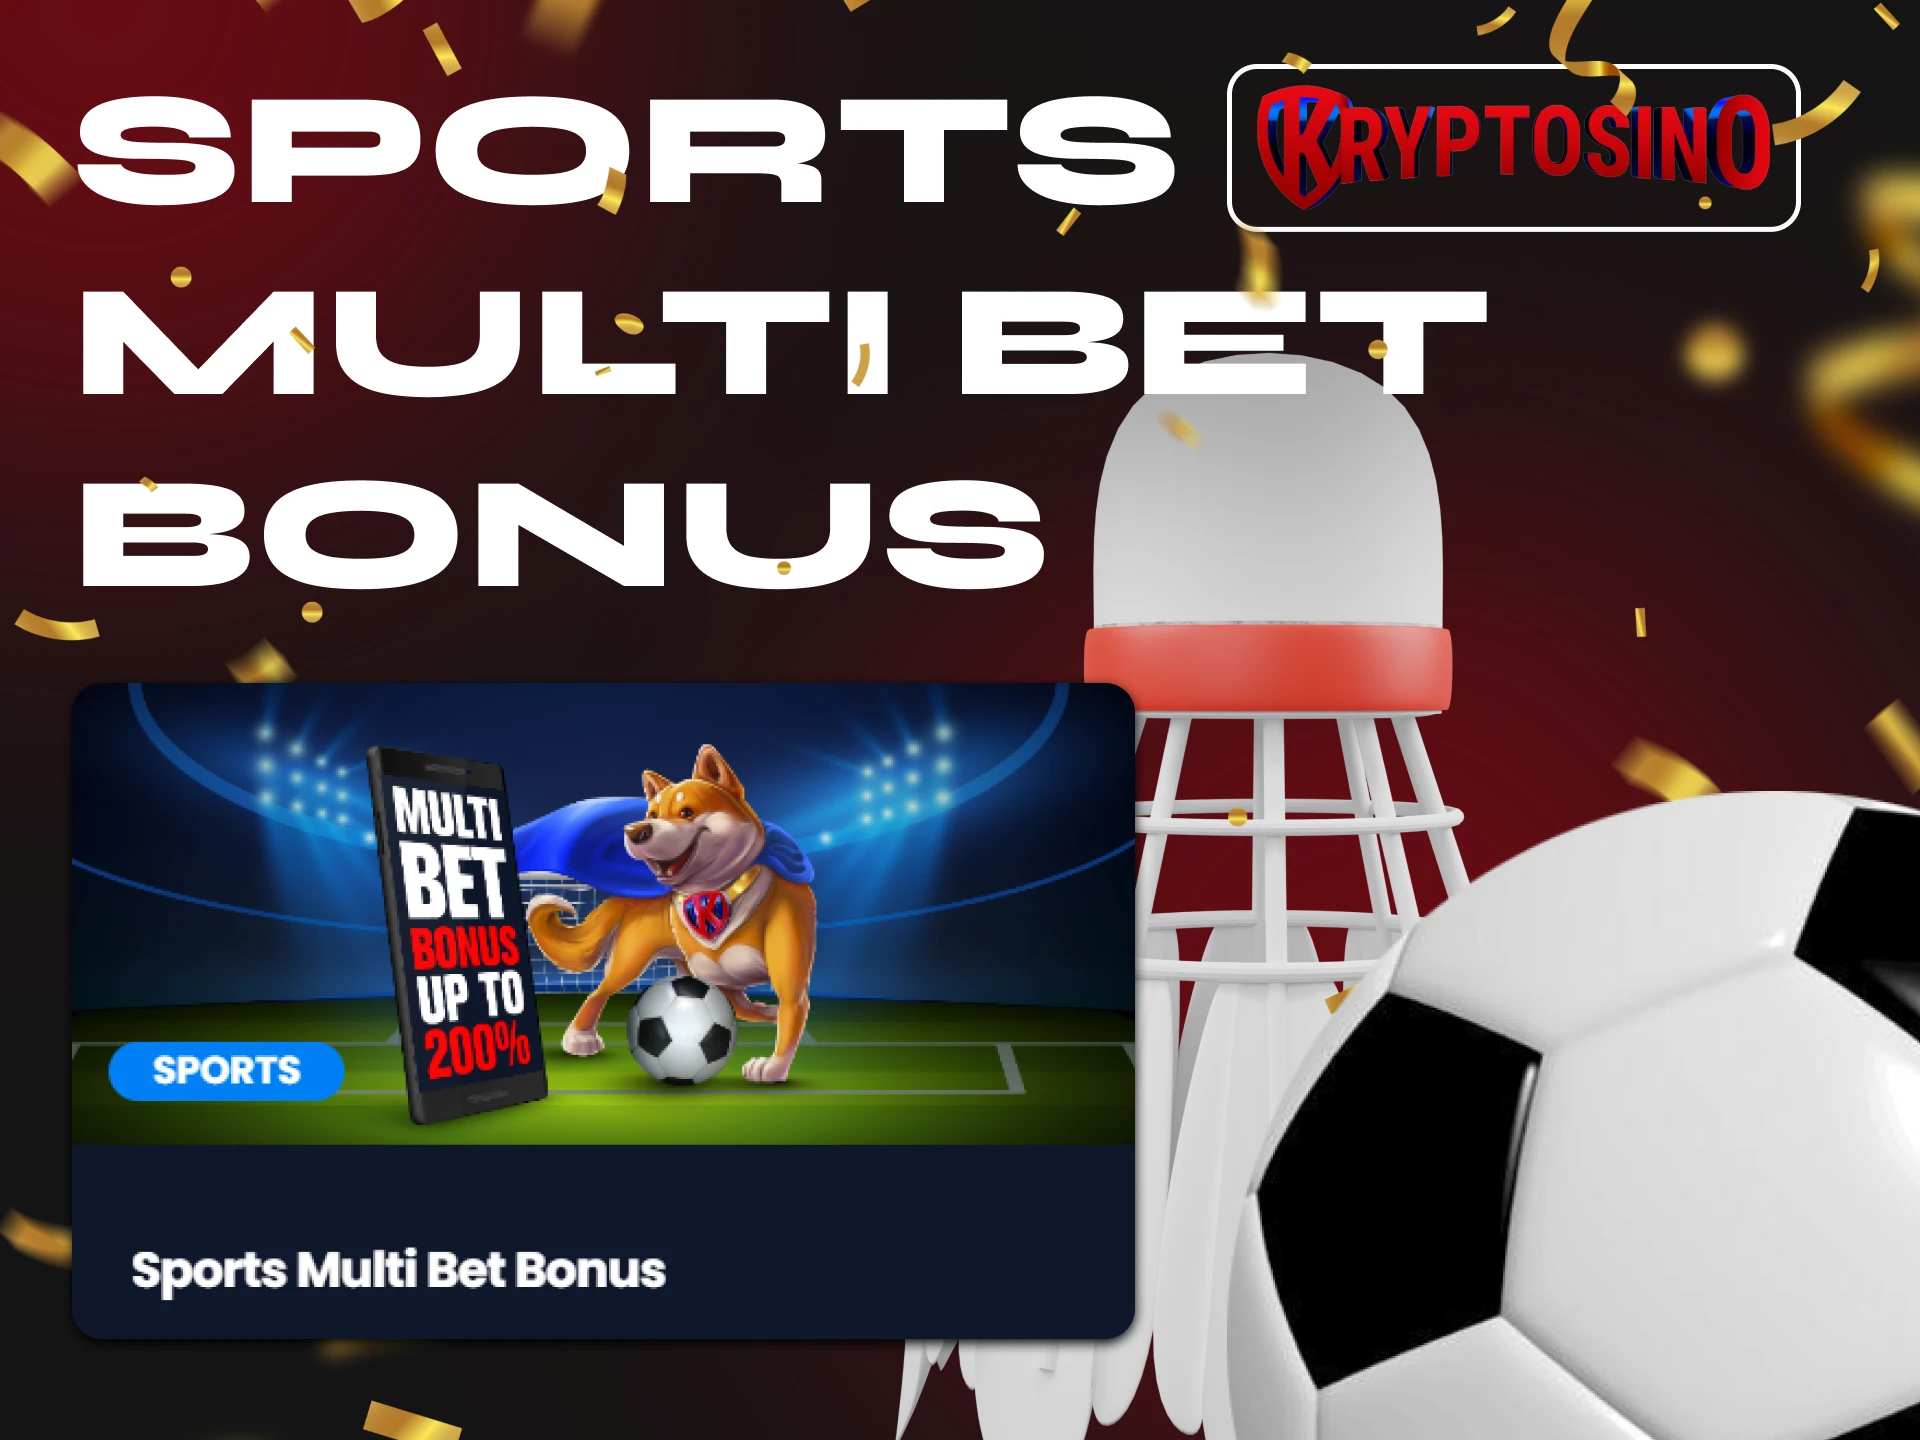 Increase your winnings in sports betting with Kryptosino Casino.